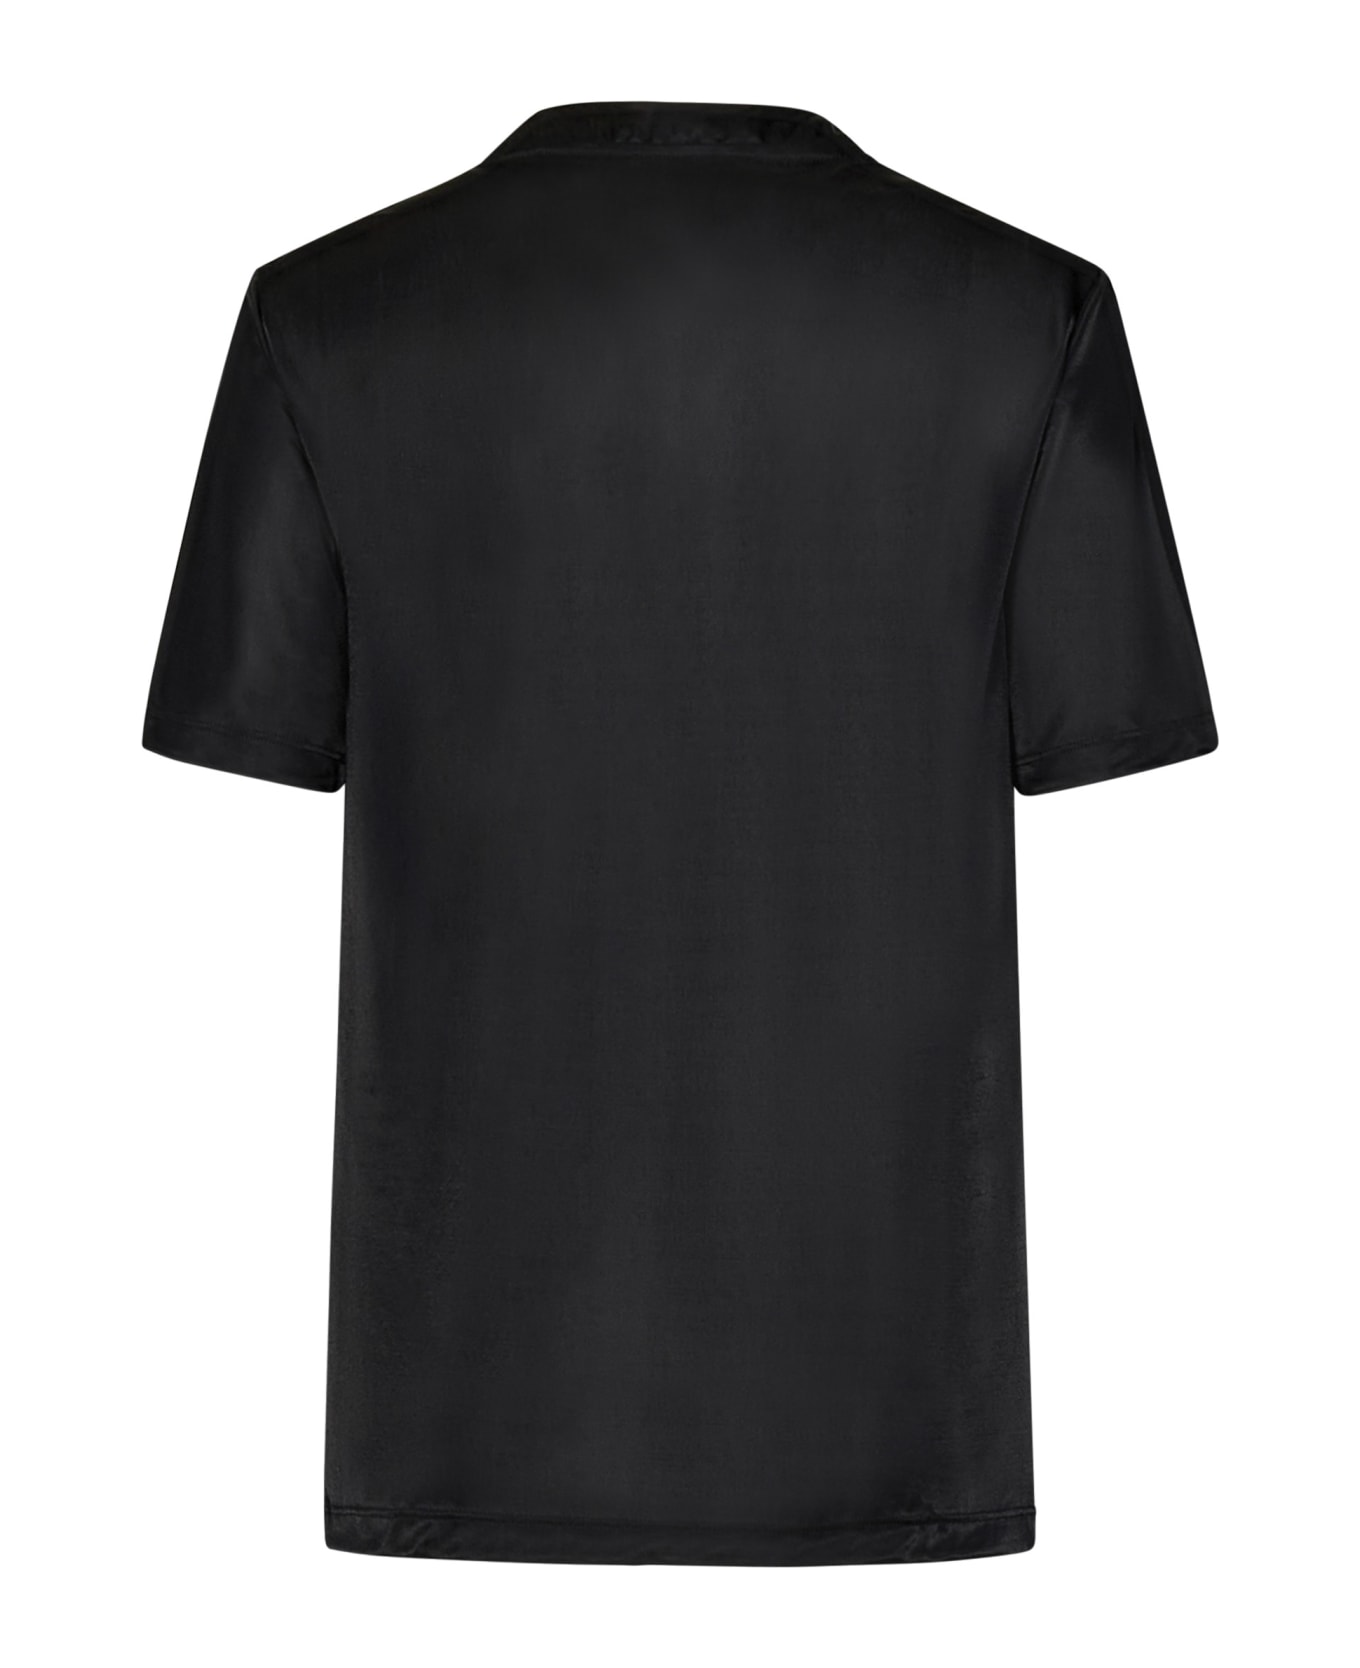 Paco Rabanne T-shirt - Black